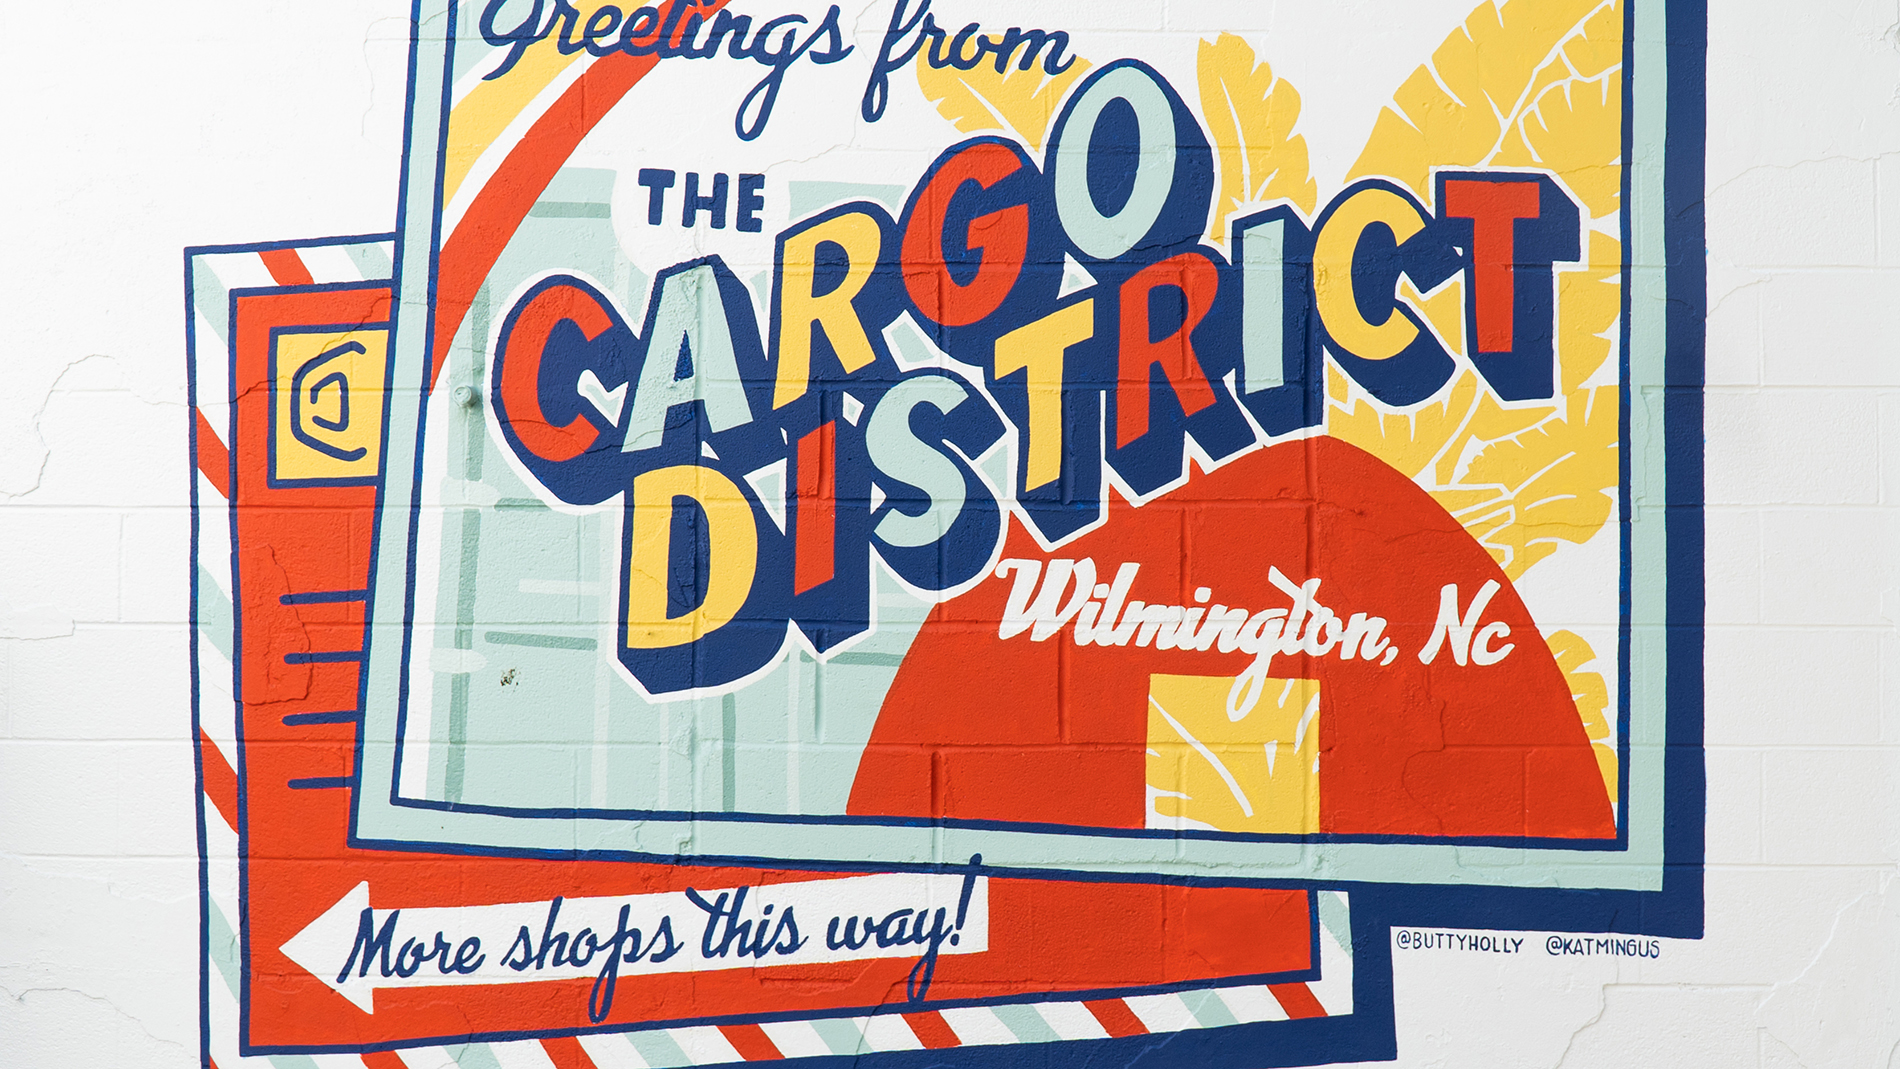 Cargo District, Wilmington, NC